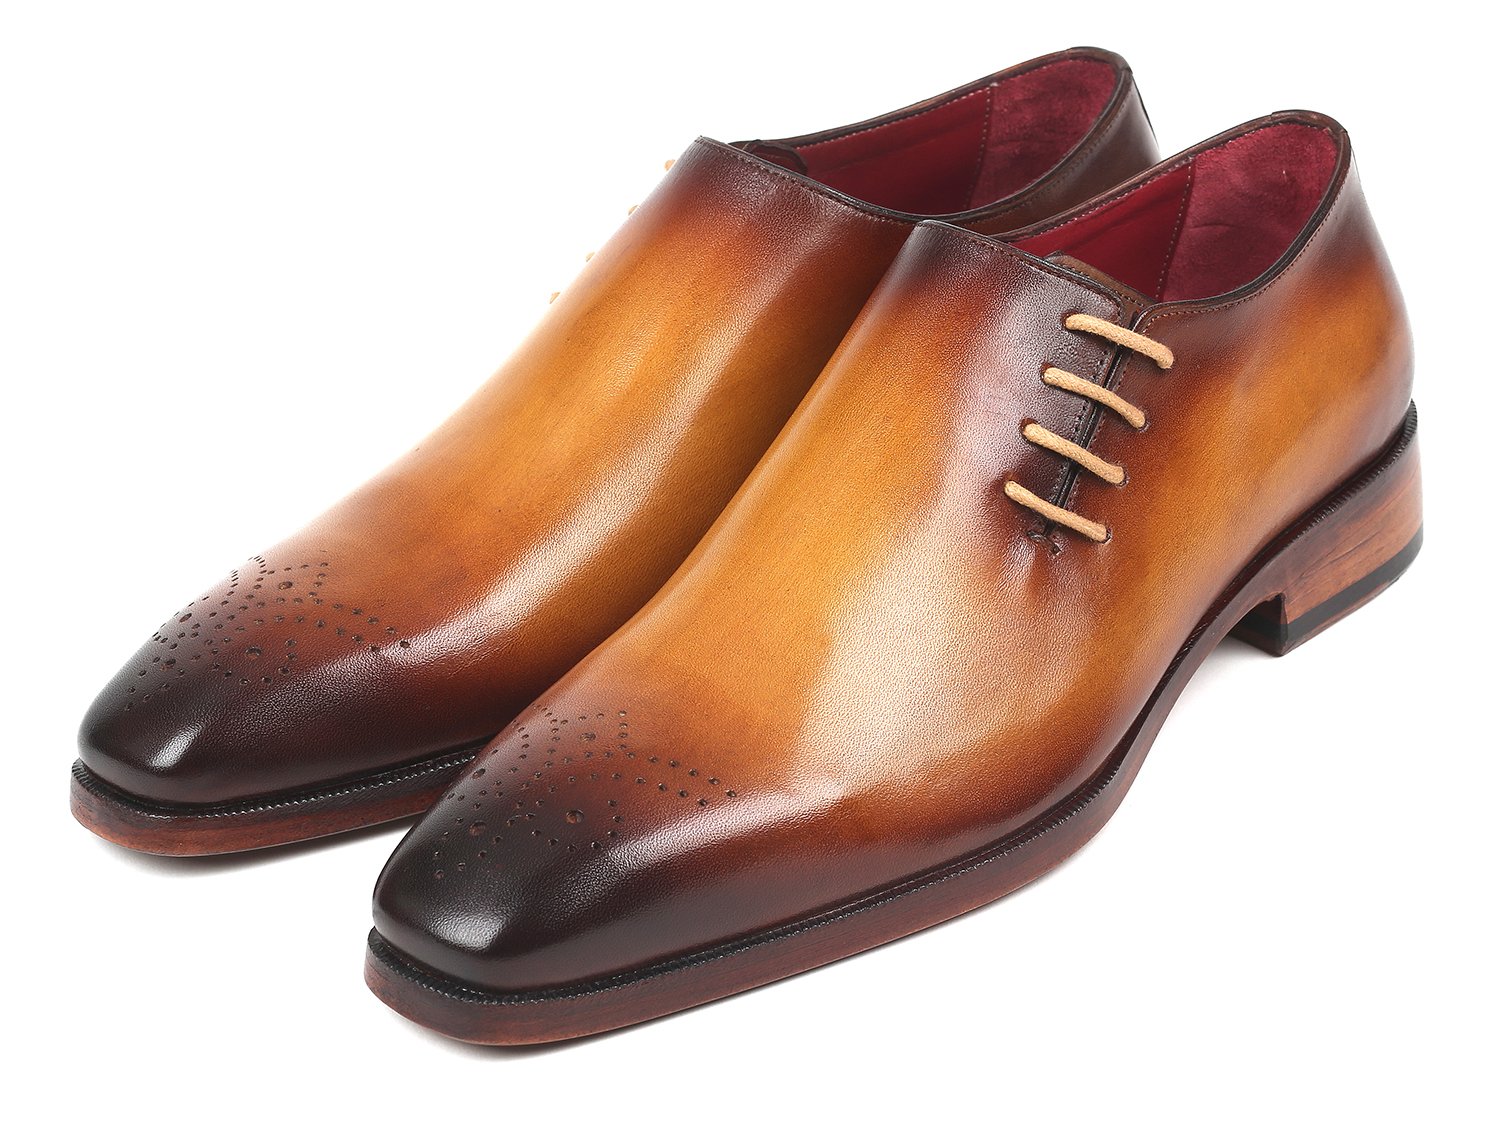 Paul Parkman "927F64" Brown / Camel Genuine Leather Side Lace Oxfords Shoes.